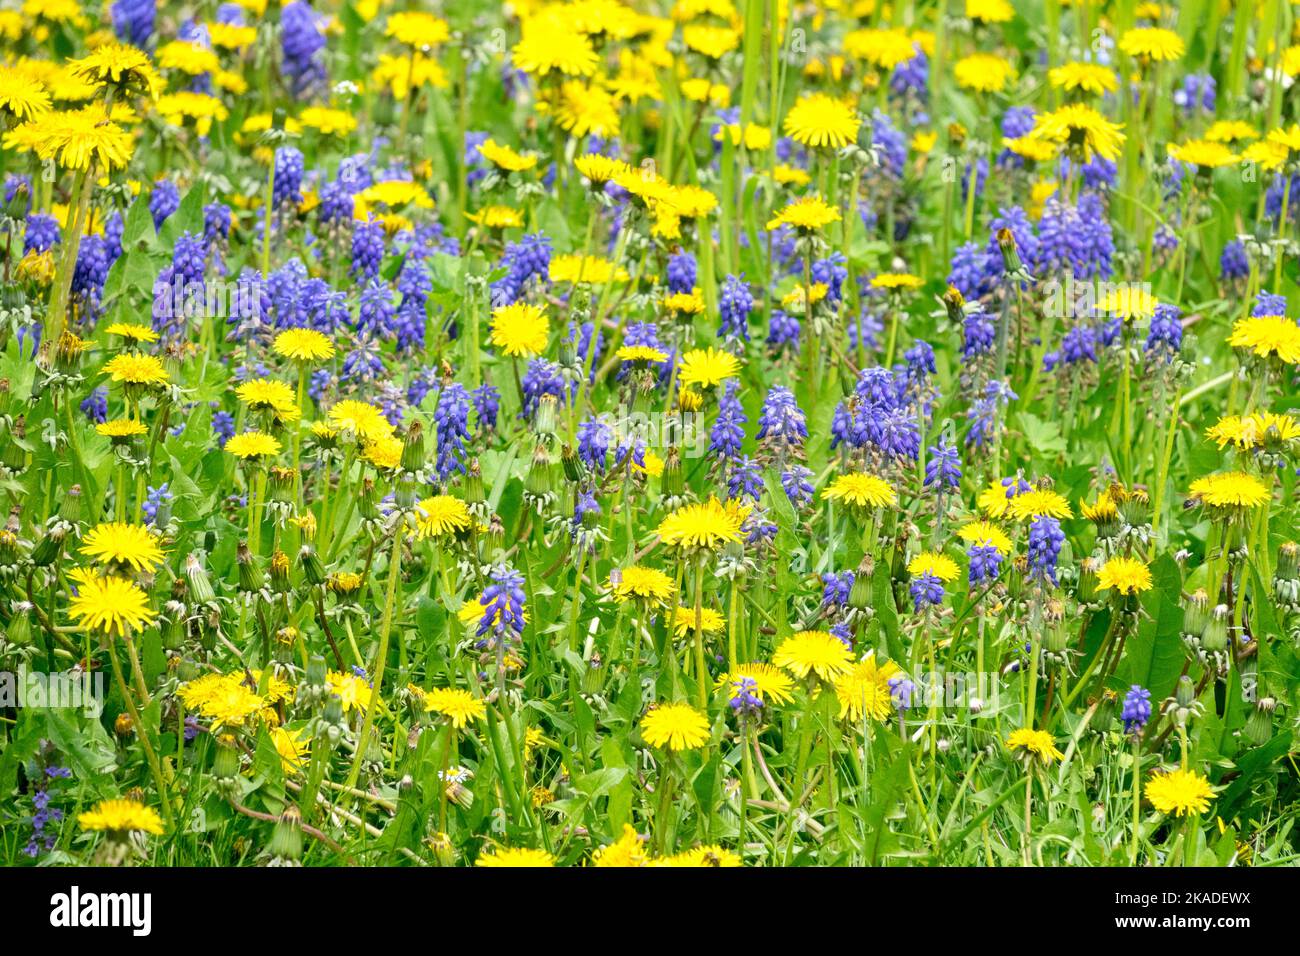 Dandelions Muscari Lawn Spring Meadow Flowery Yellow blue Flowers Blue yellow Dandelions Taraxacum officinale Muscari armeniacum Grape hyacinth Field Stock Photo